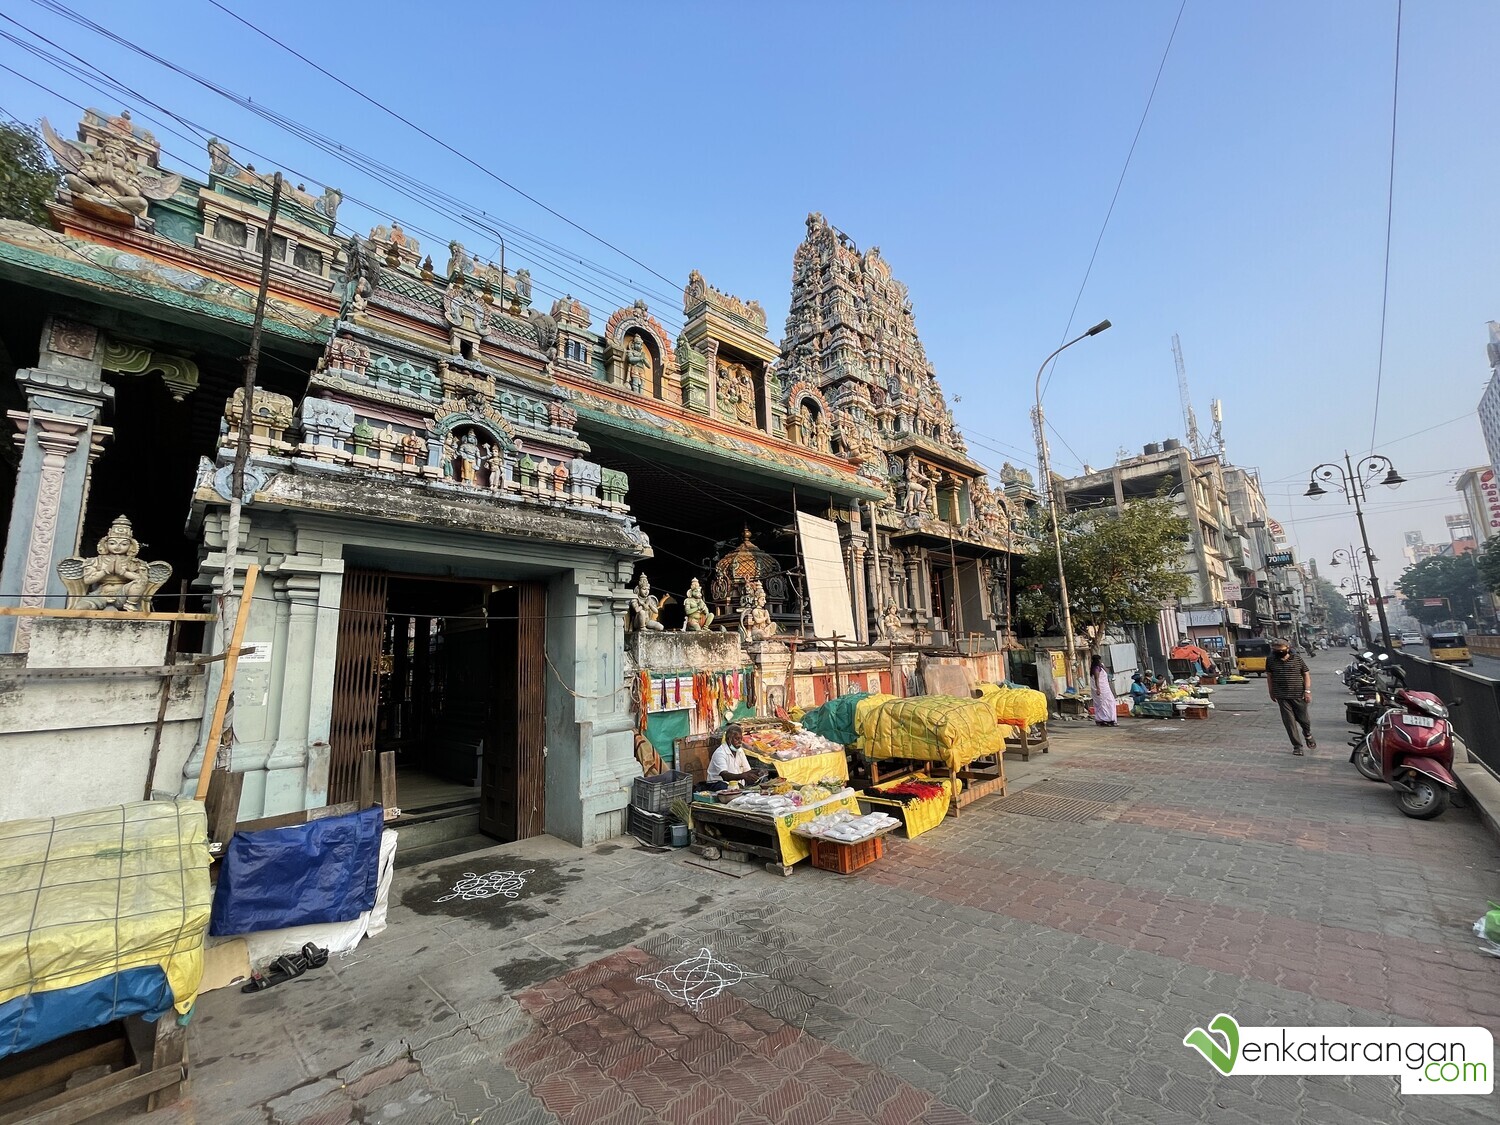  Sri Siva Vishnu Temple near T.Nagar bus terminus in Usman Road, Chennai